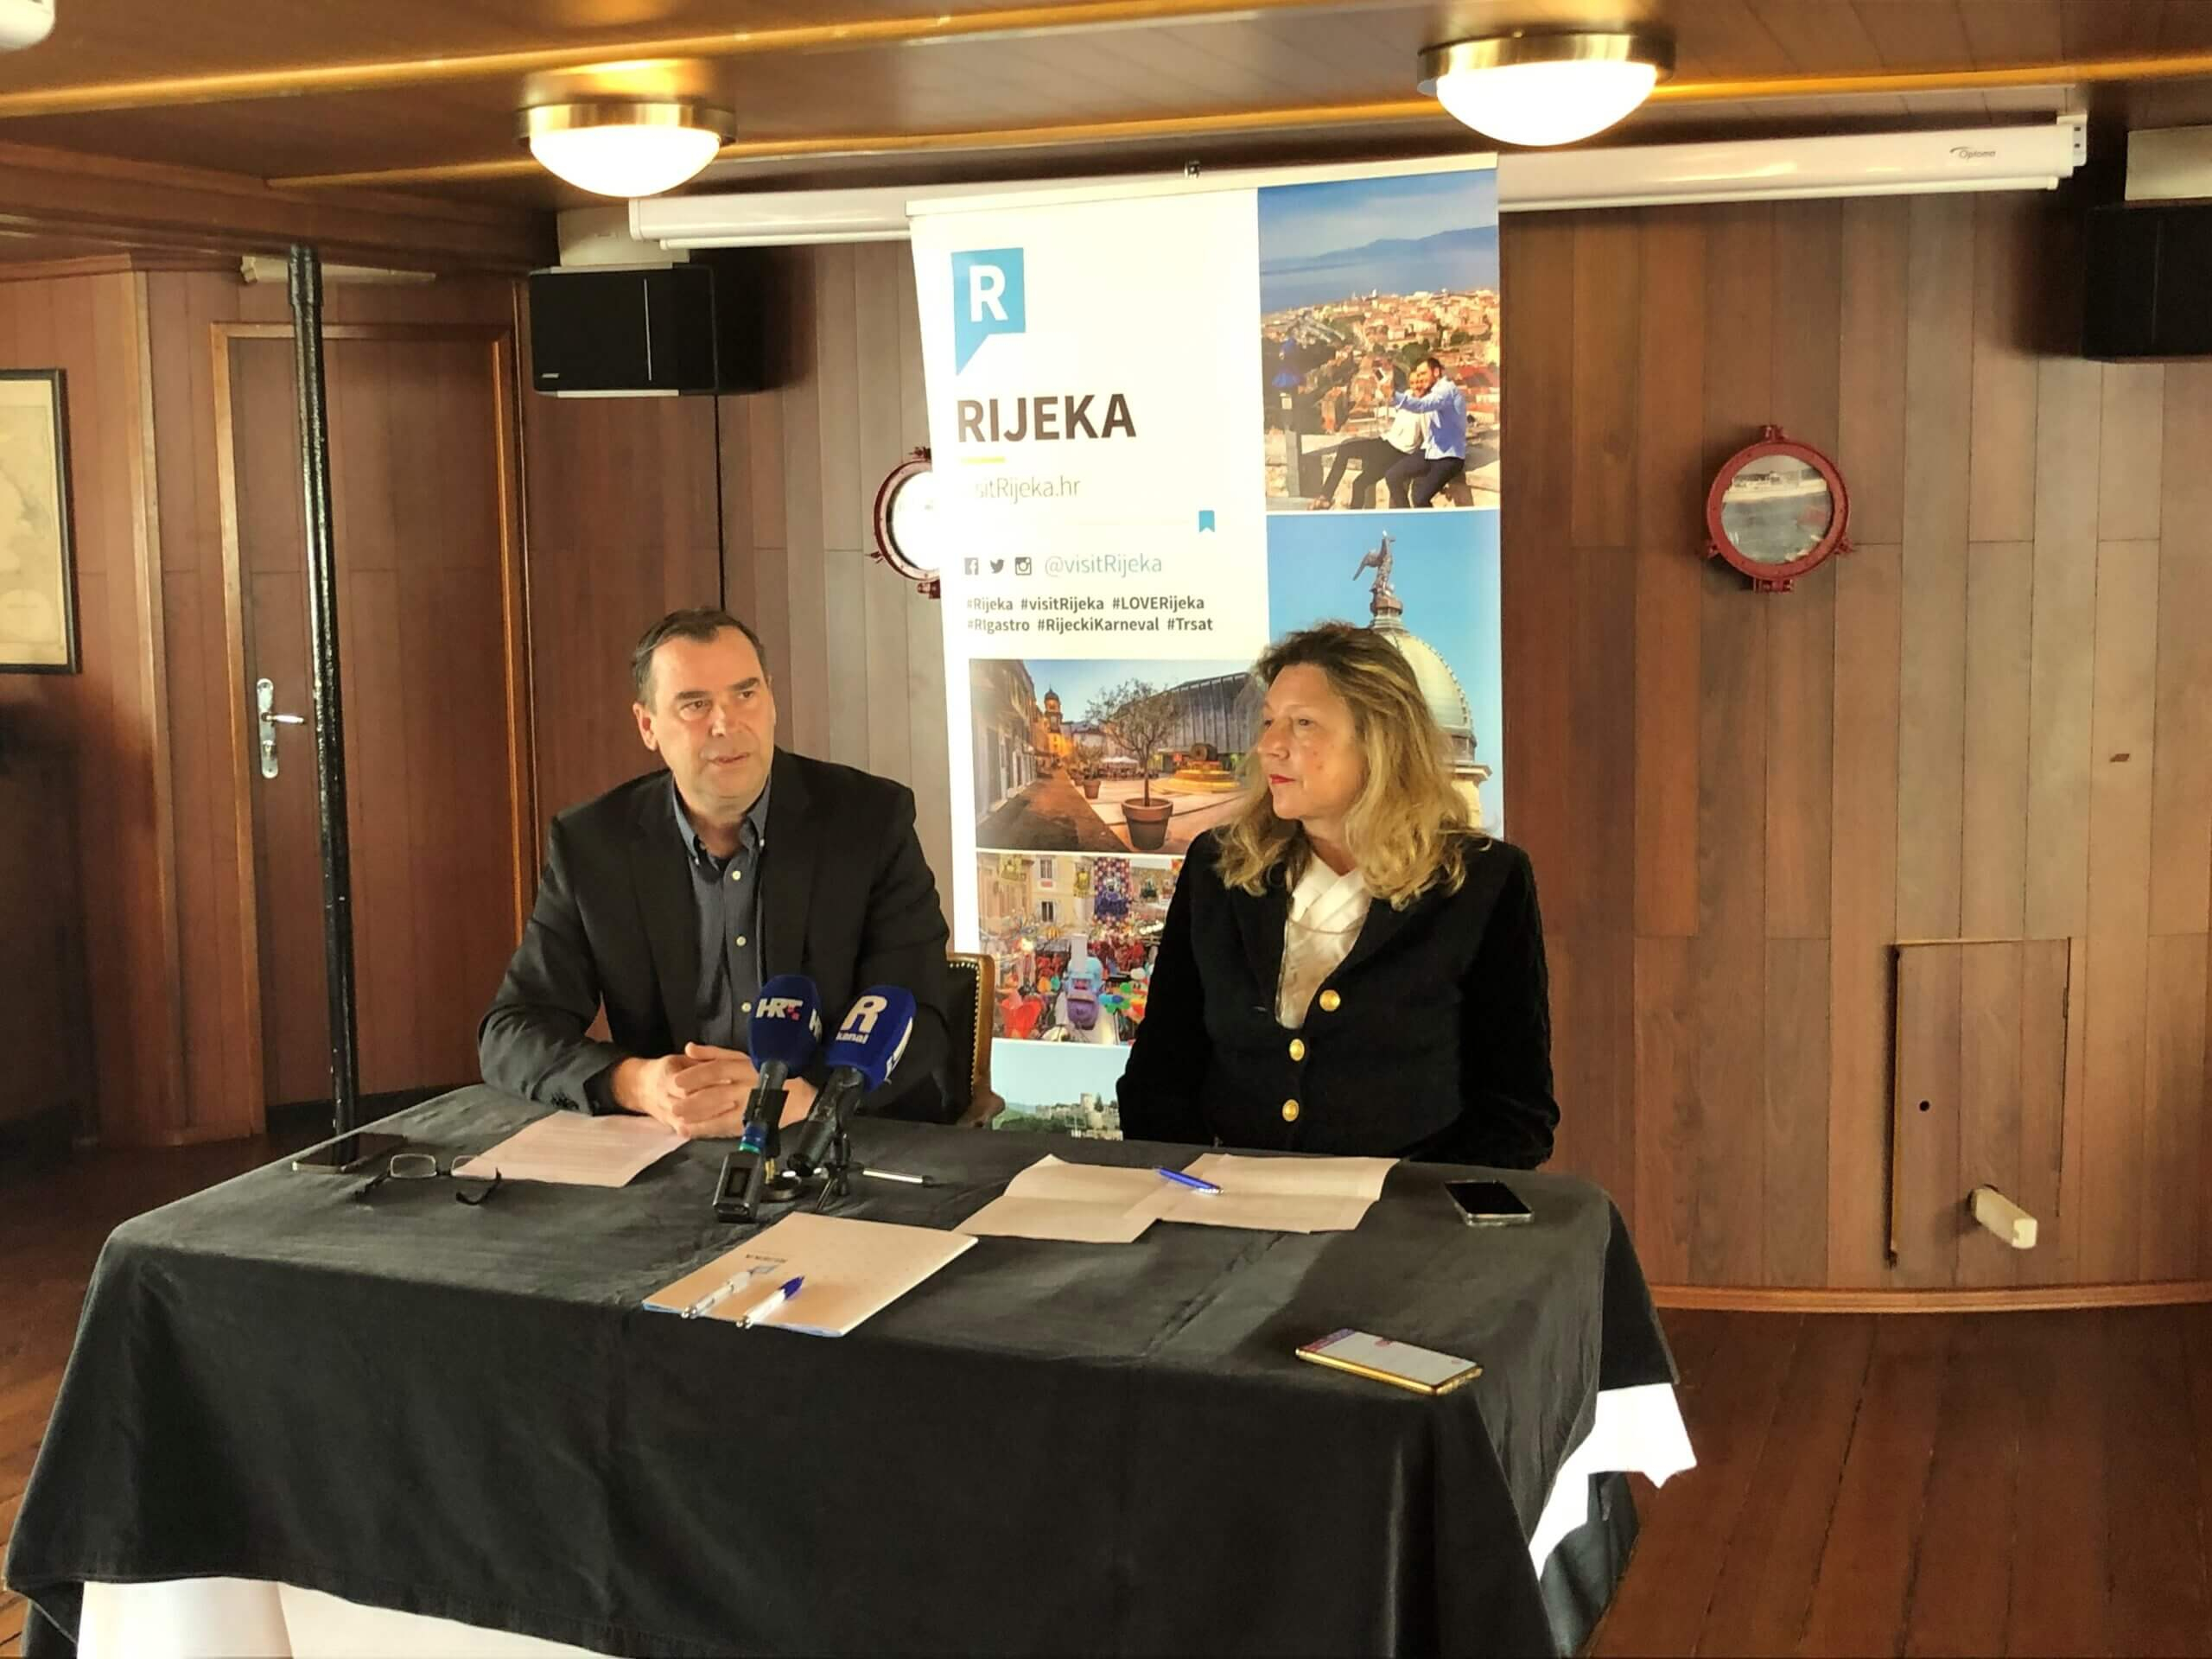 Rijeka Tourist Board